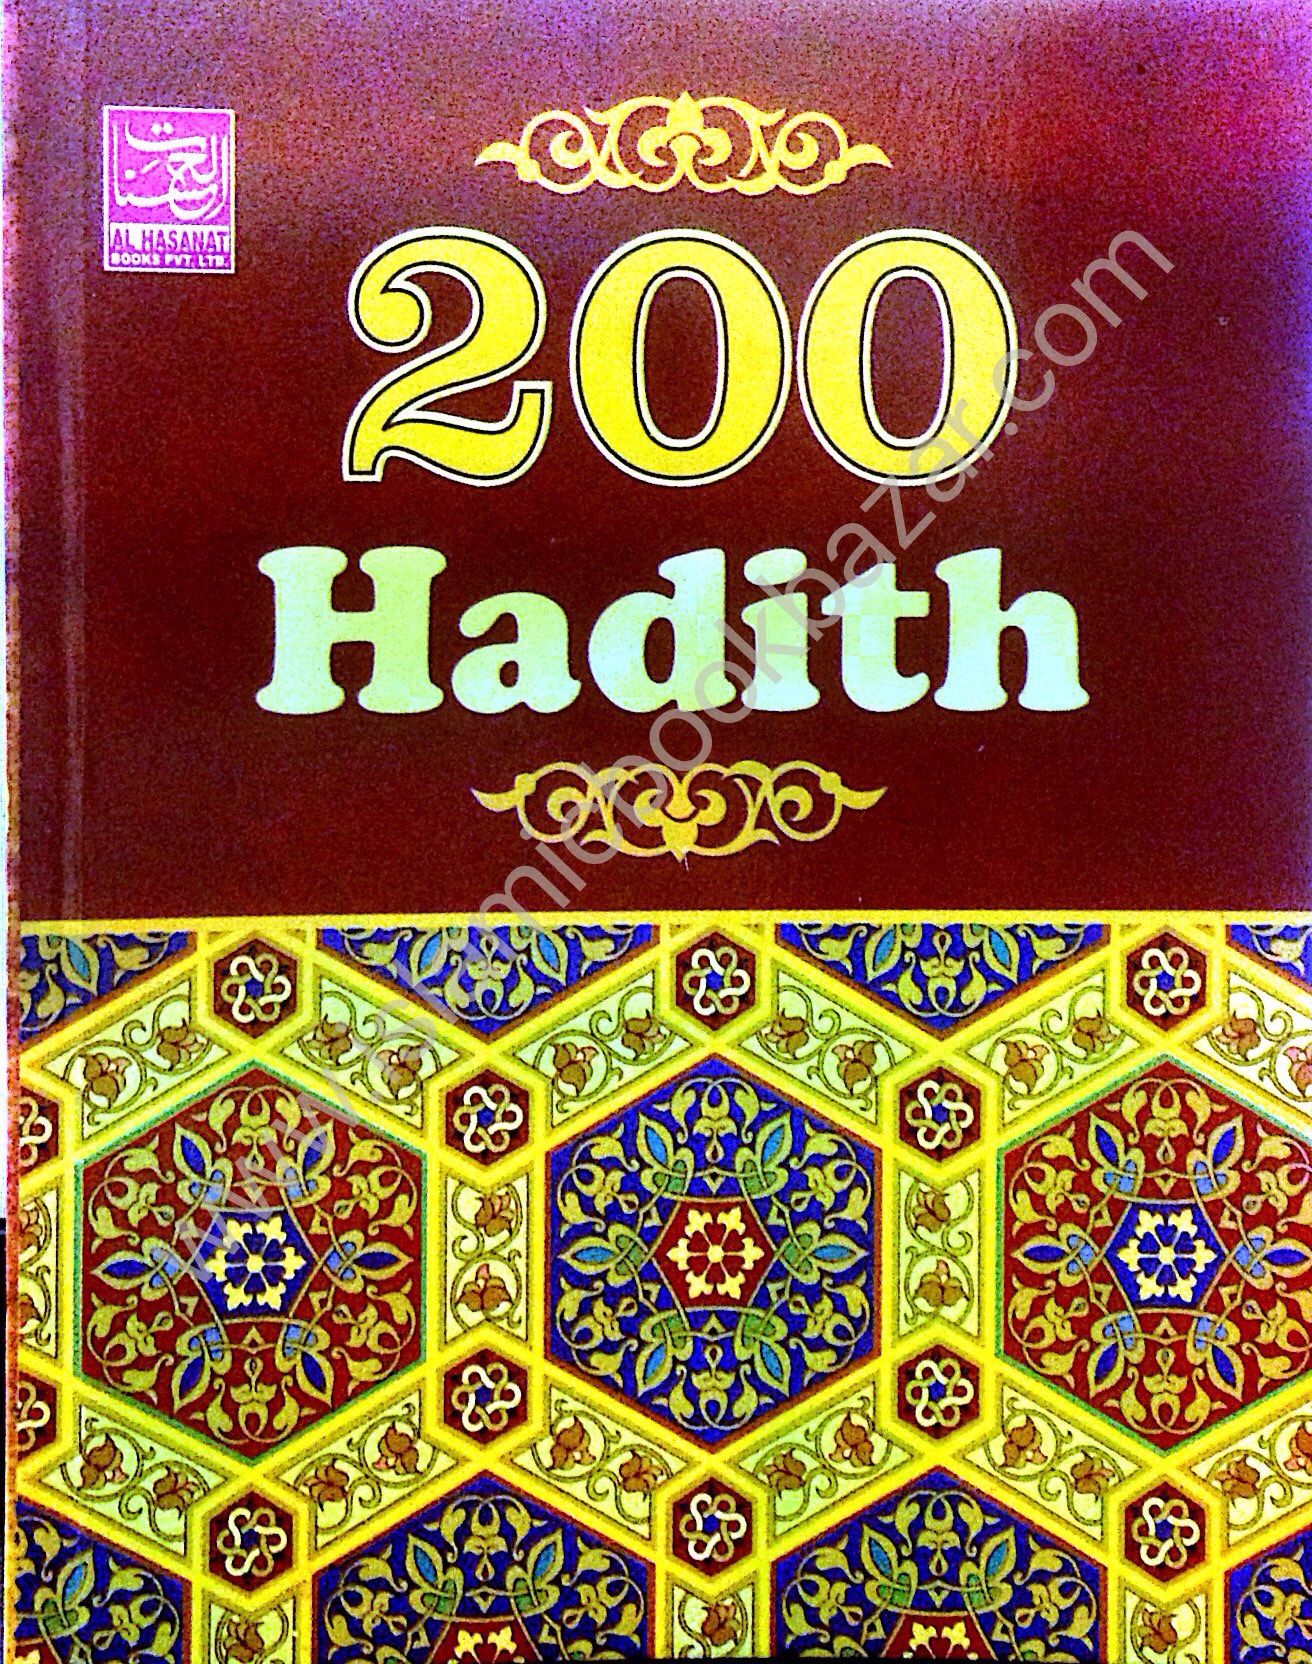 islamic hadith books